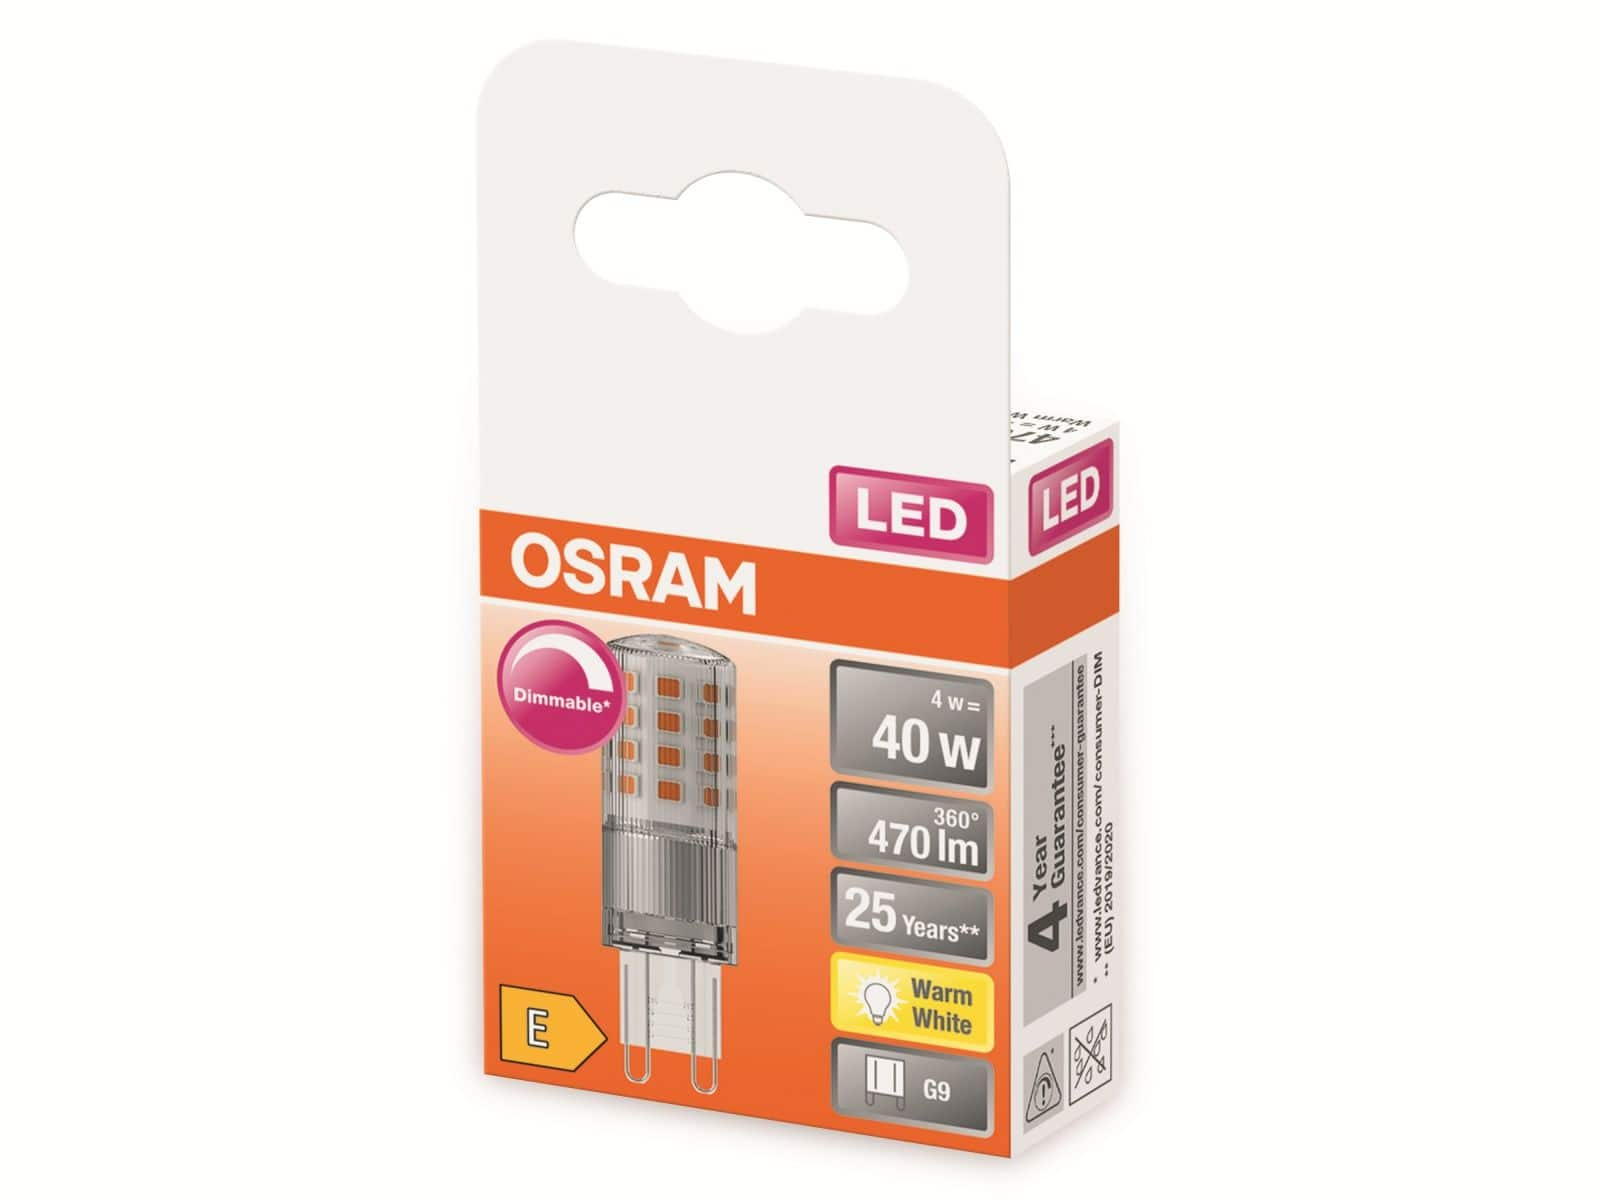 PIN Lumen OSRAM  470 DIM Warmweiß LED LED G9 Lampe